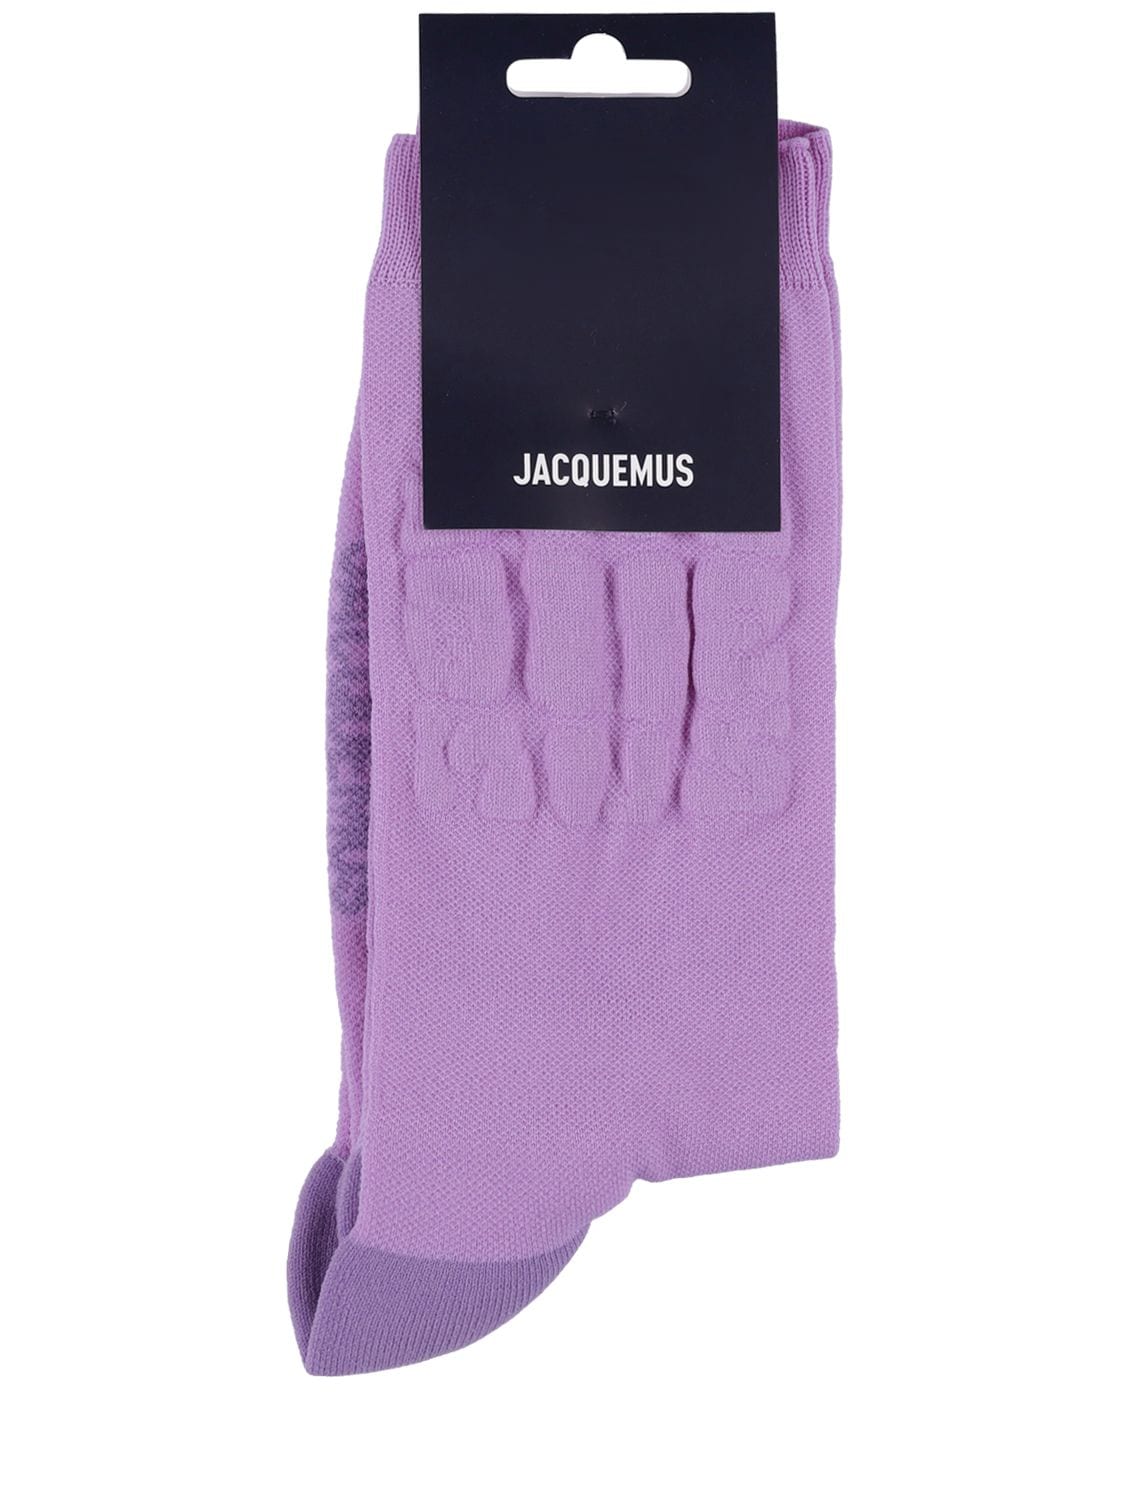 Jacquemus Les Chaussettes Banho Socks In Purple